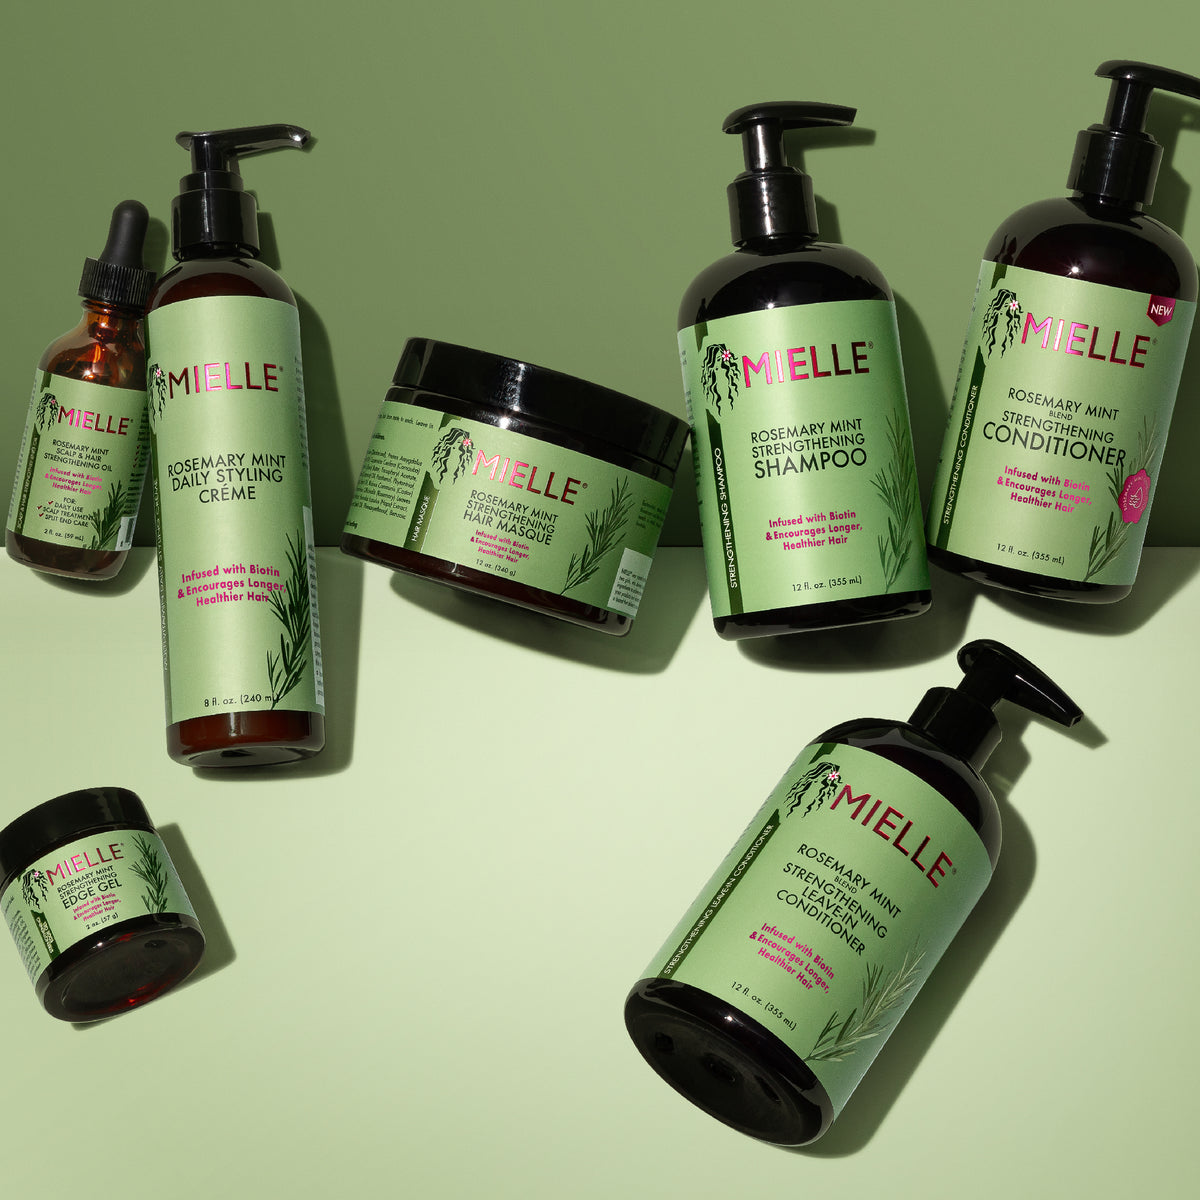 Rosemary Hair Strengthening Oil, Scalp Oil for Hair Growth- MIELLE